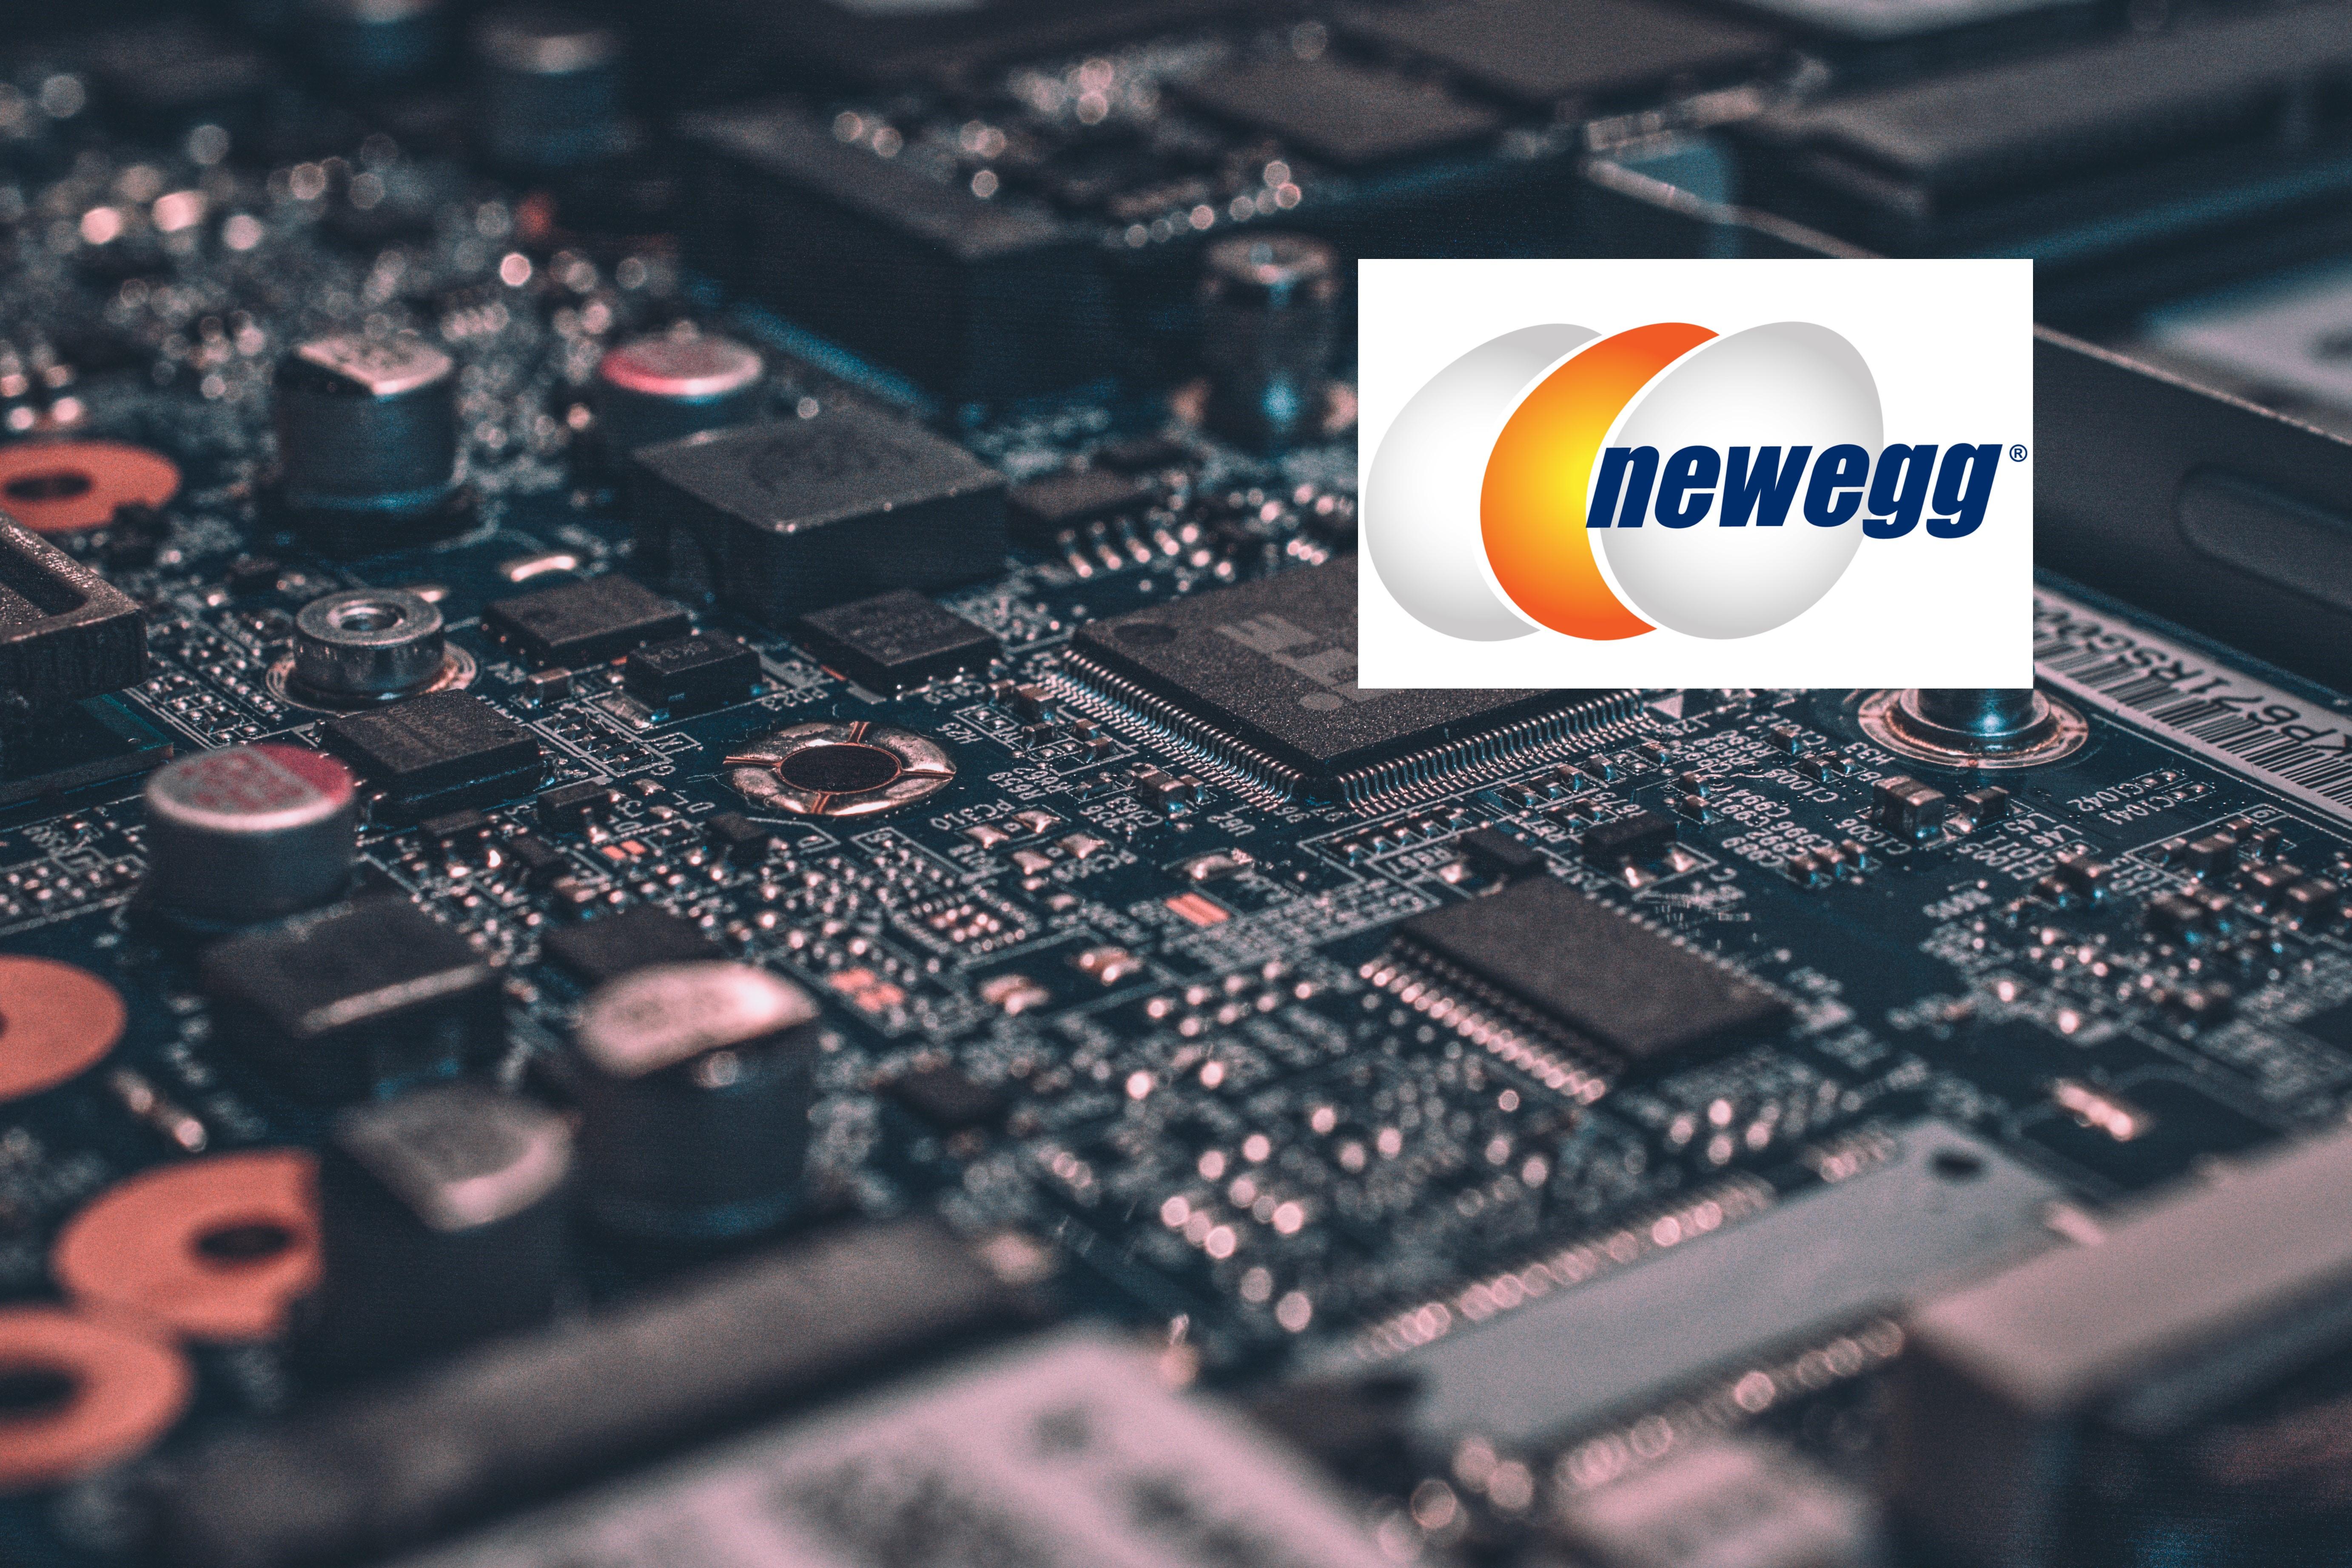 Newegg logo over motherboard computer parts